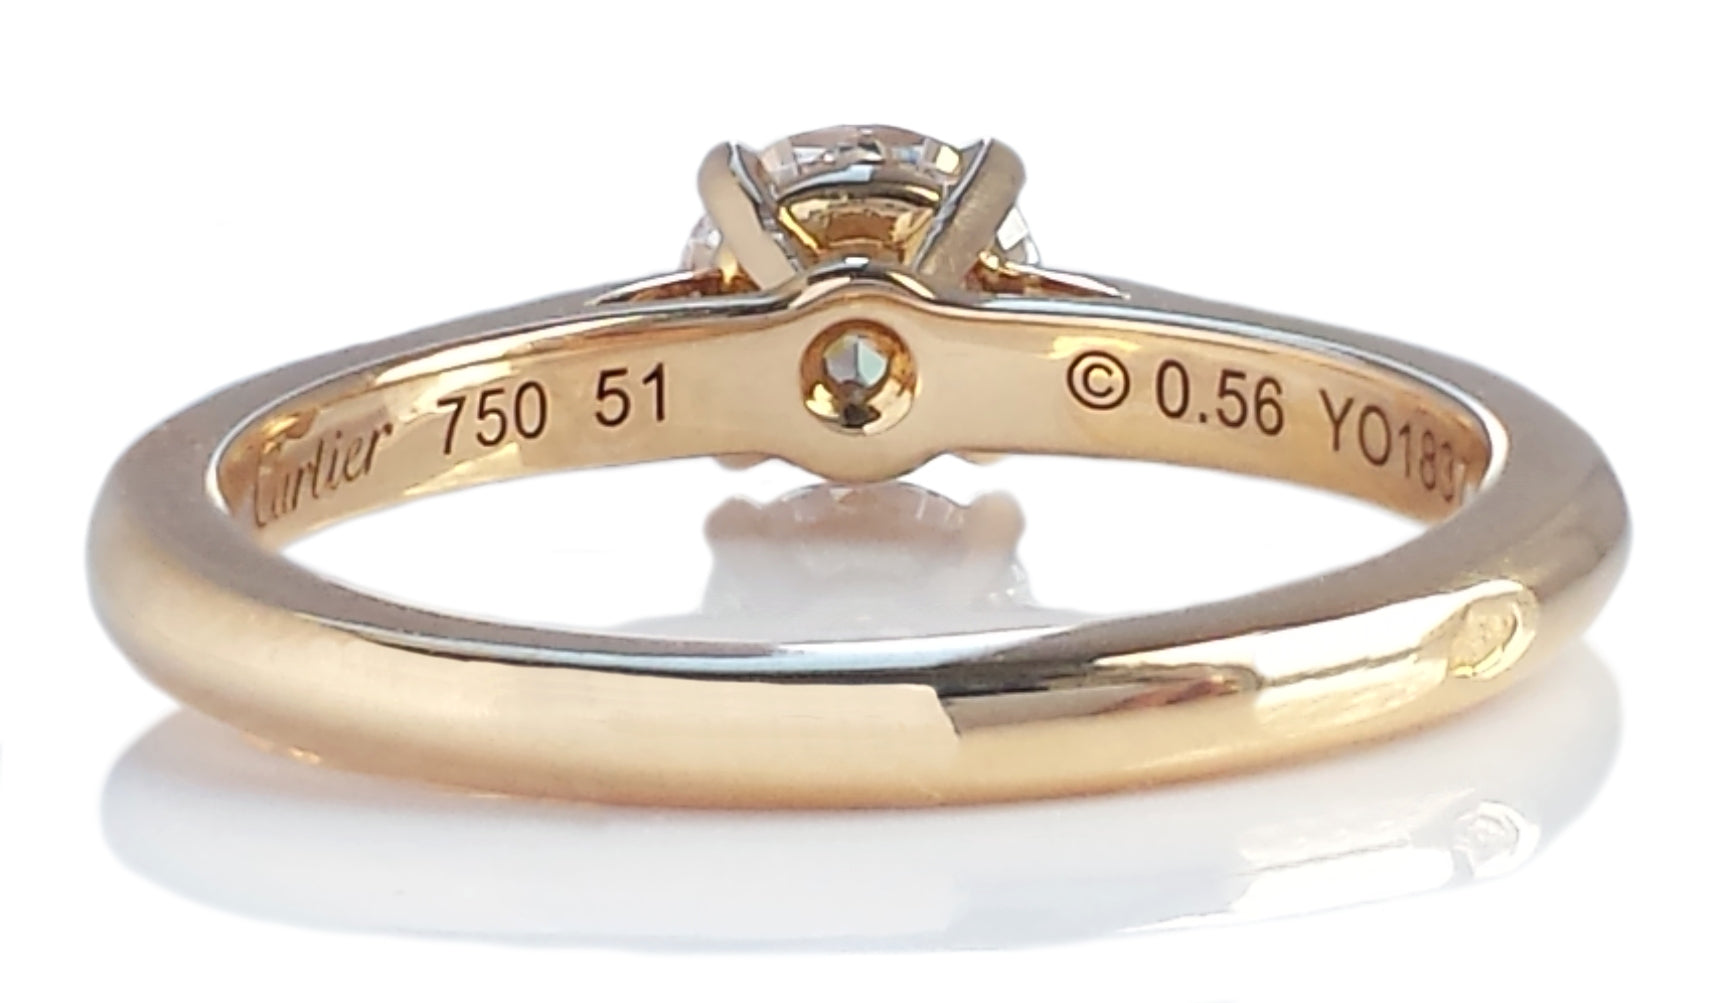 Cartier 0.56ct G/VVS1 1895 Round Brilliant Diamond Engagement Ring